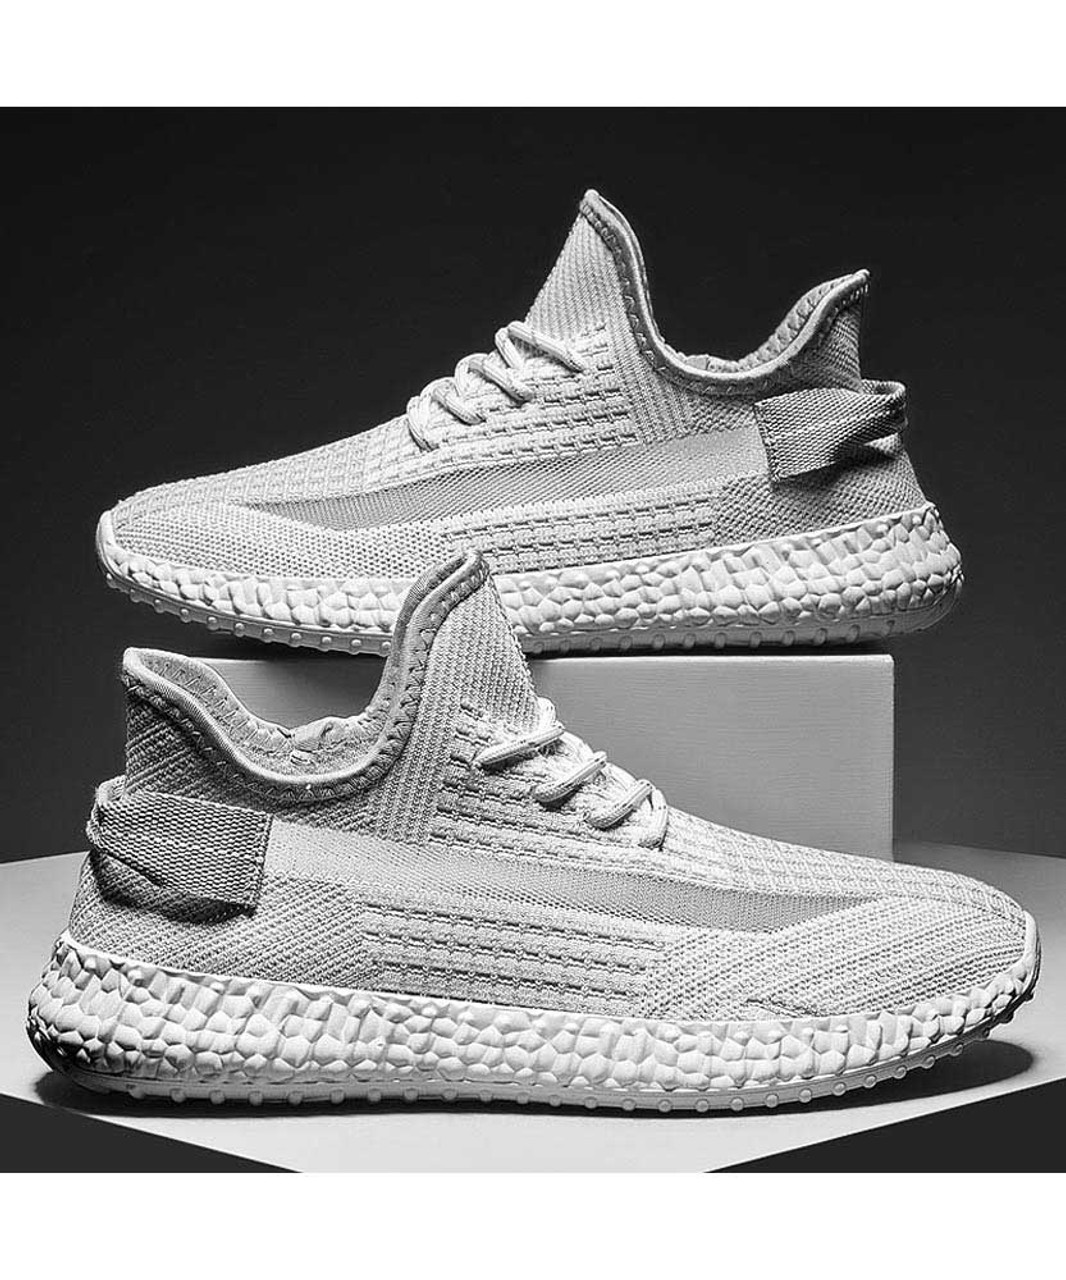 Grey flyknit texture stripe check casual shoe sneaker | Womens sneakers ...